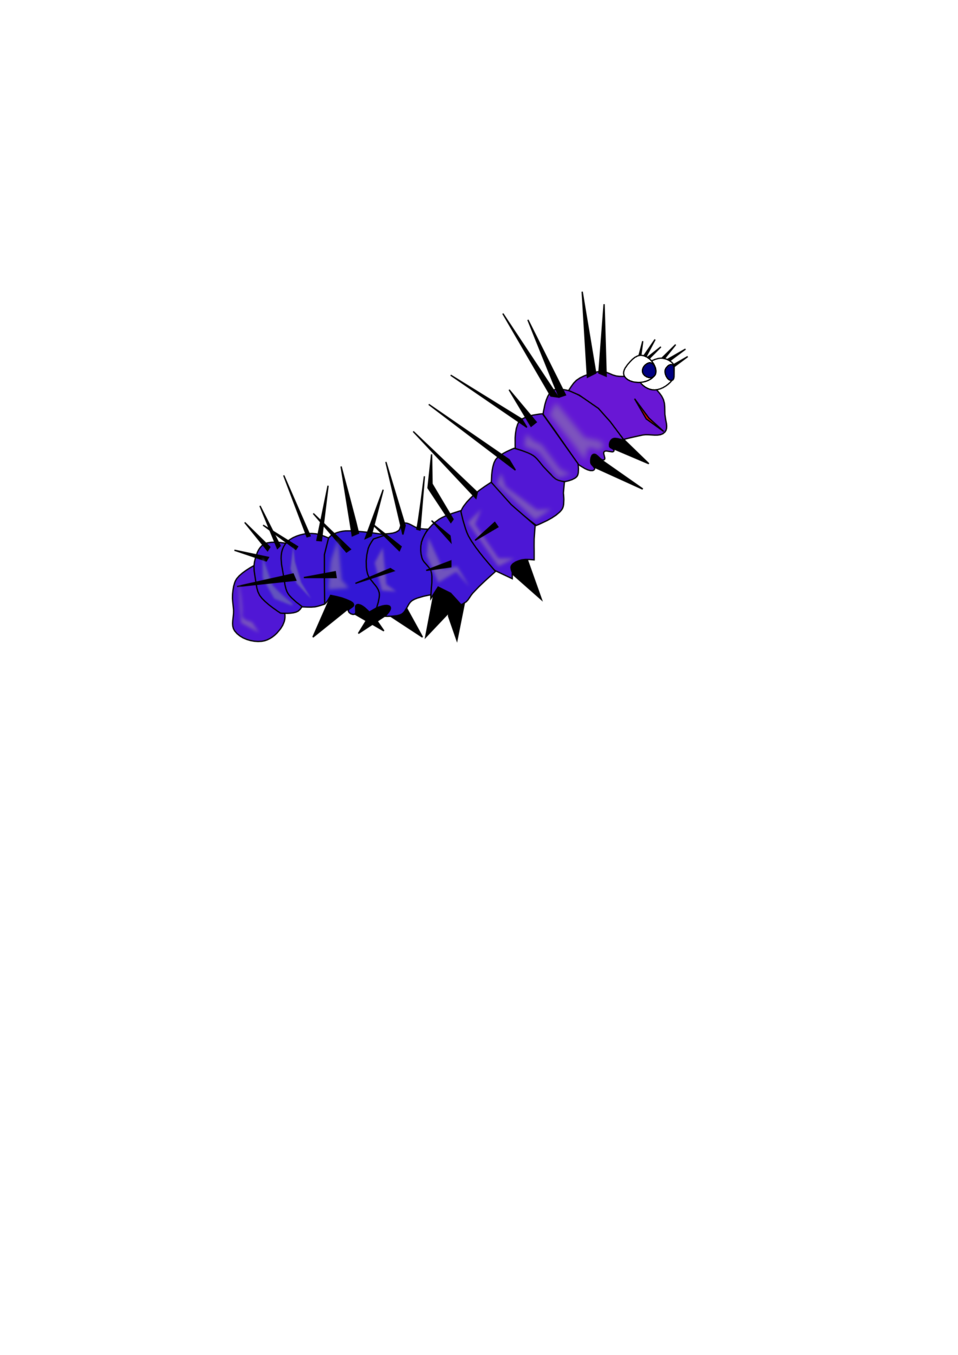 Public domain clip art. Worm clipart gusano